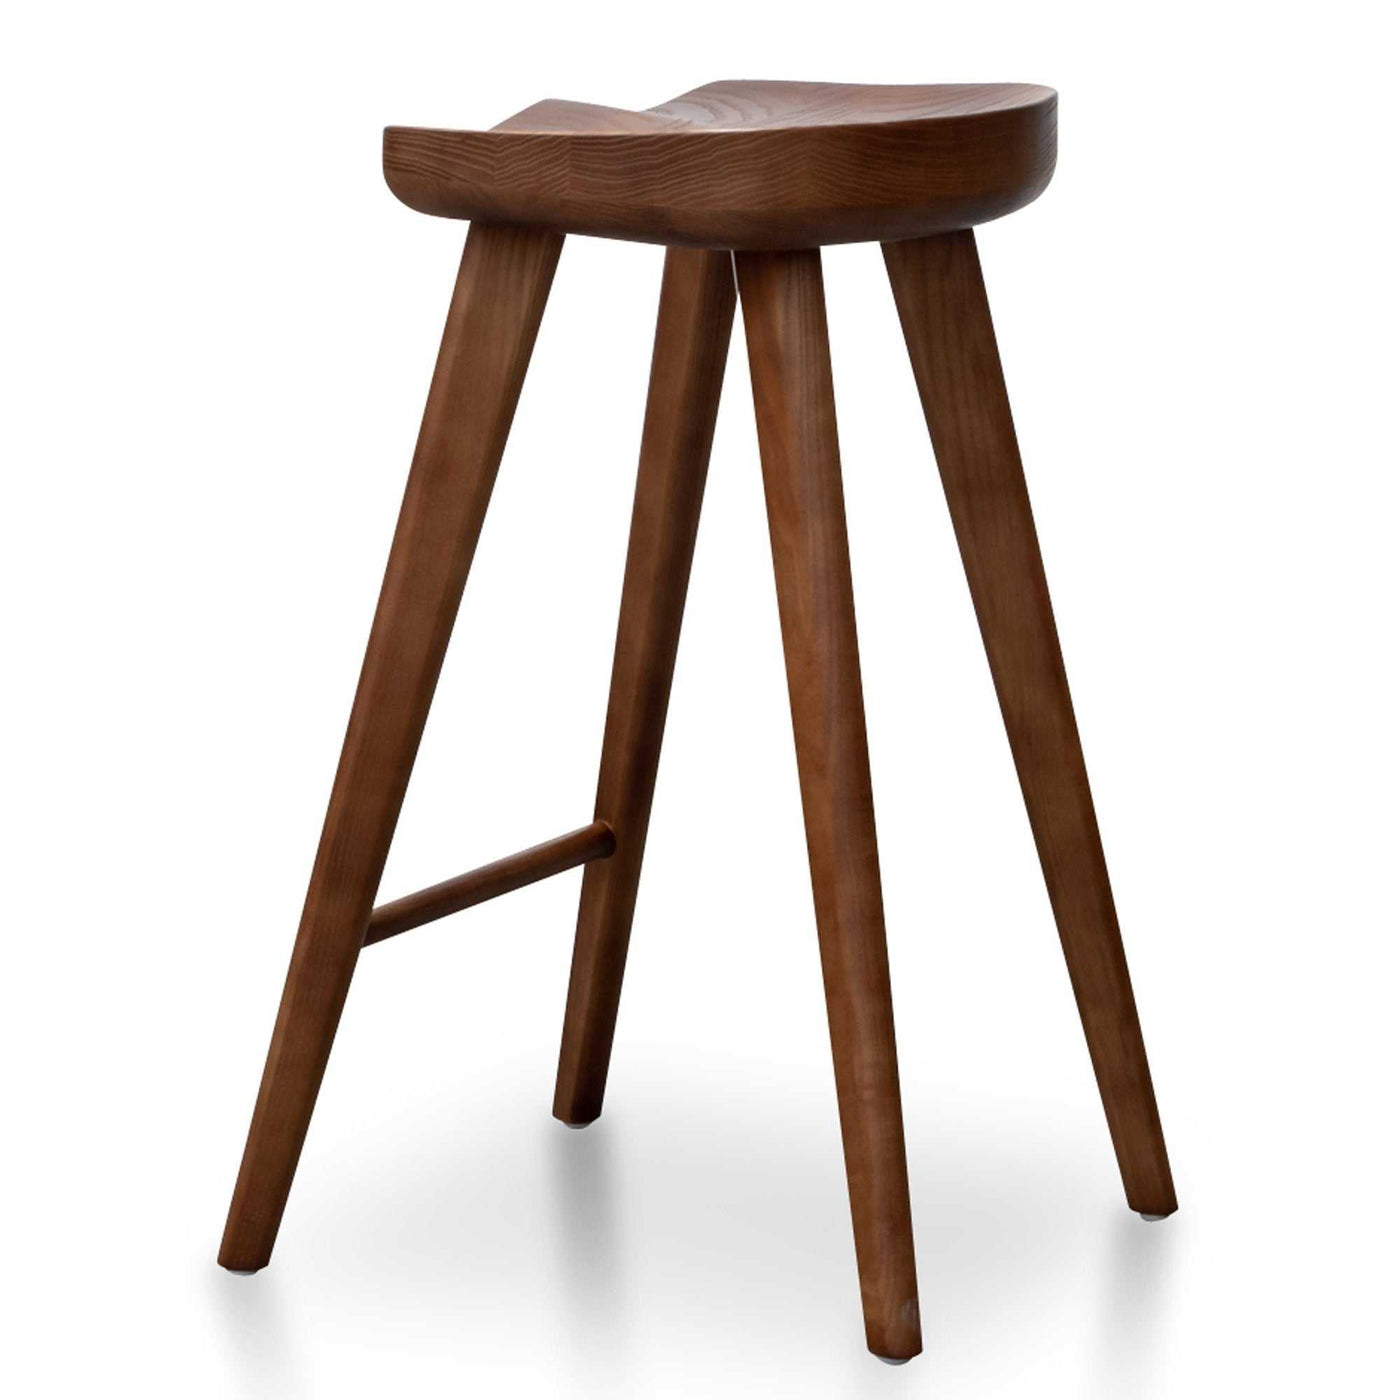 65cm Wooden Bar stool - Walnut